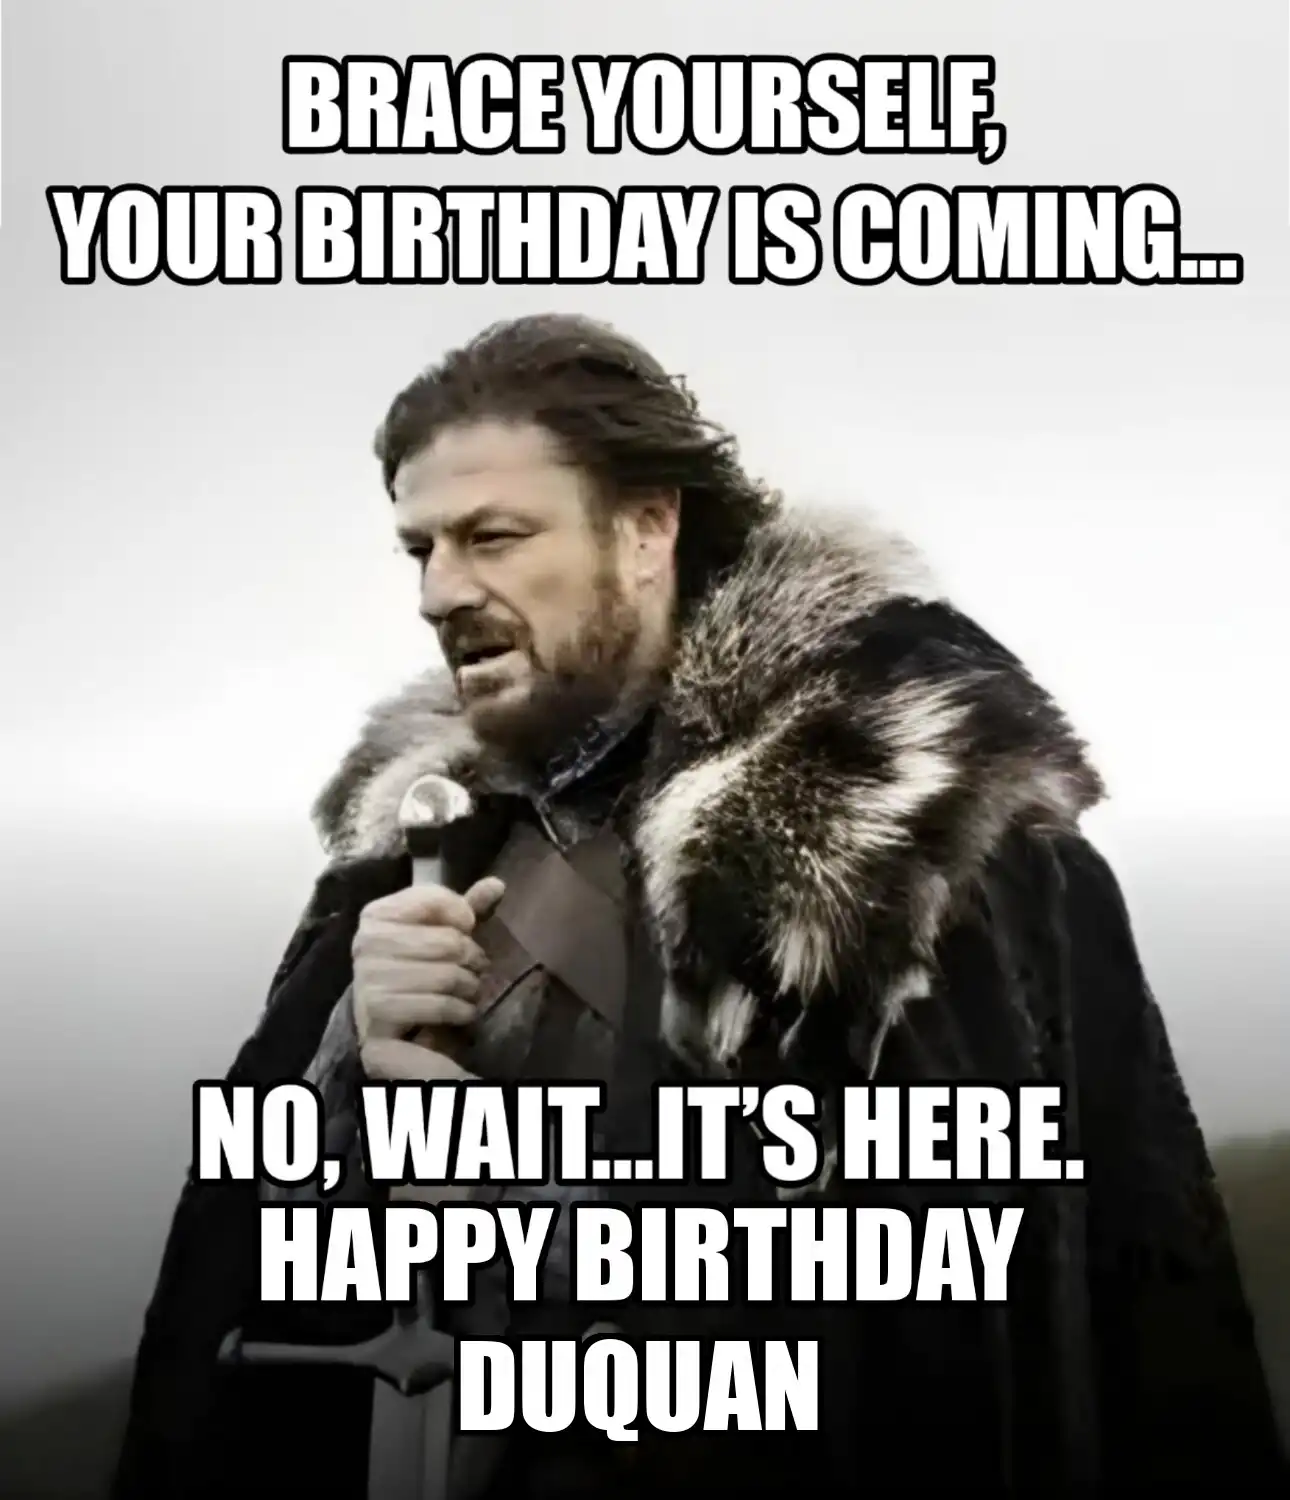 Happy Birthday Duquan Brace Yourself Your Birthday Is Coming Meme